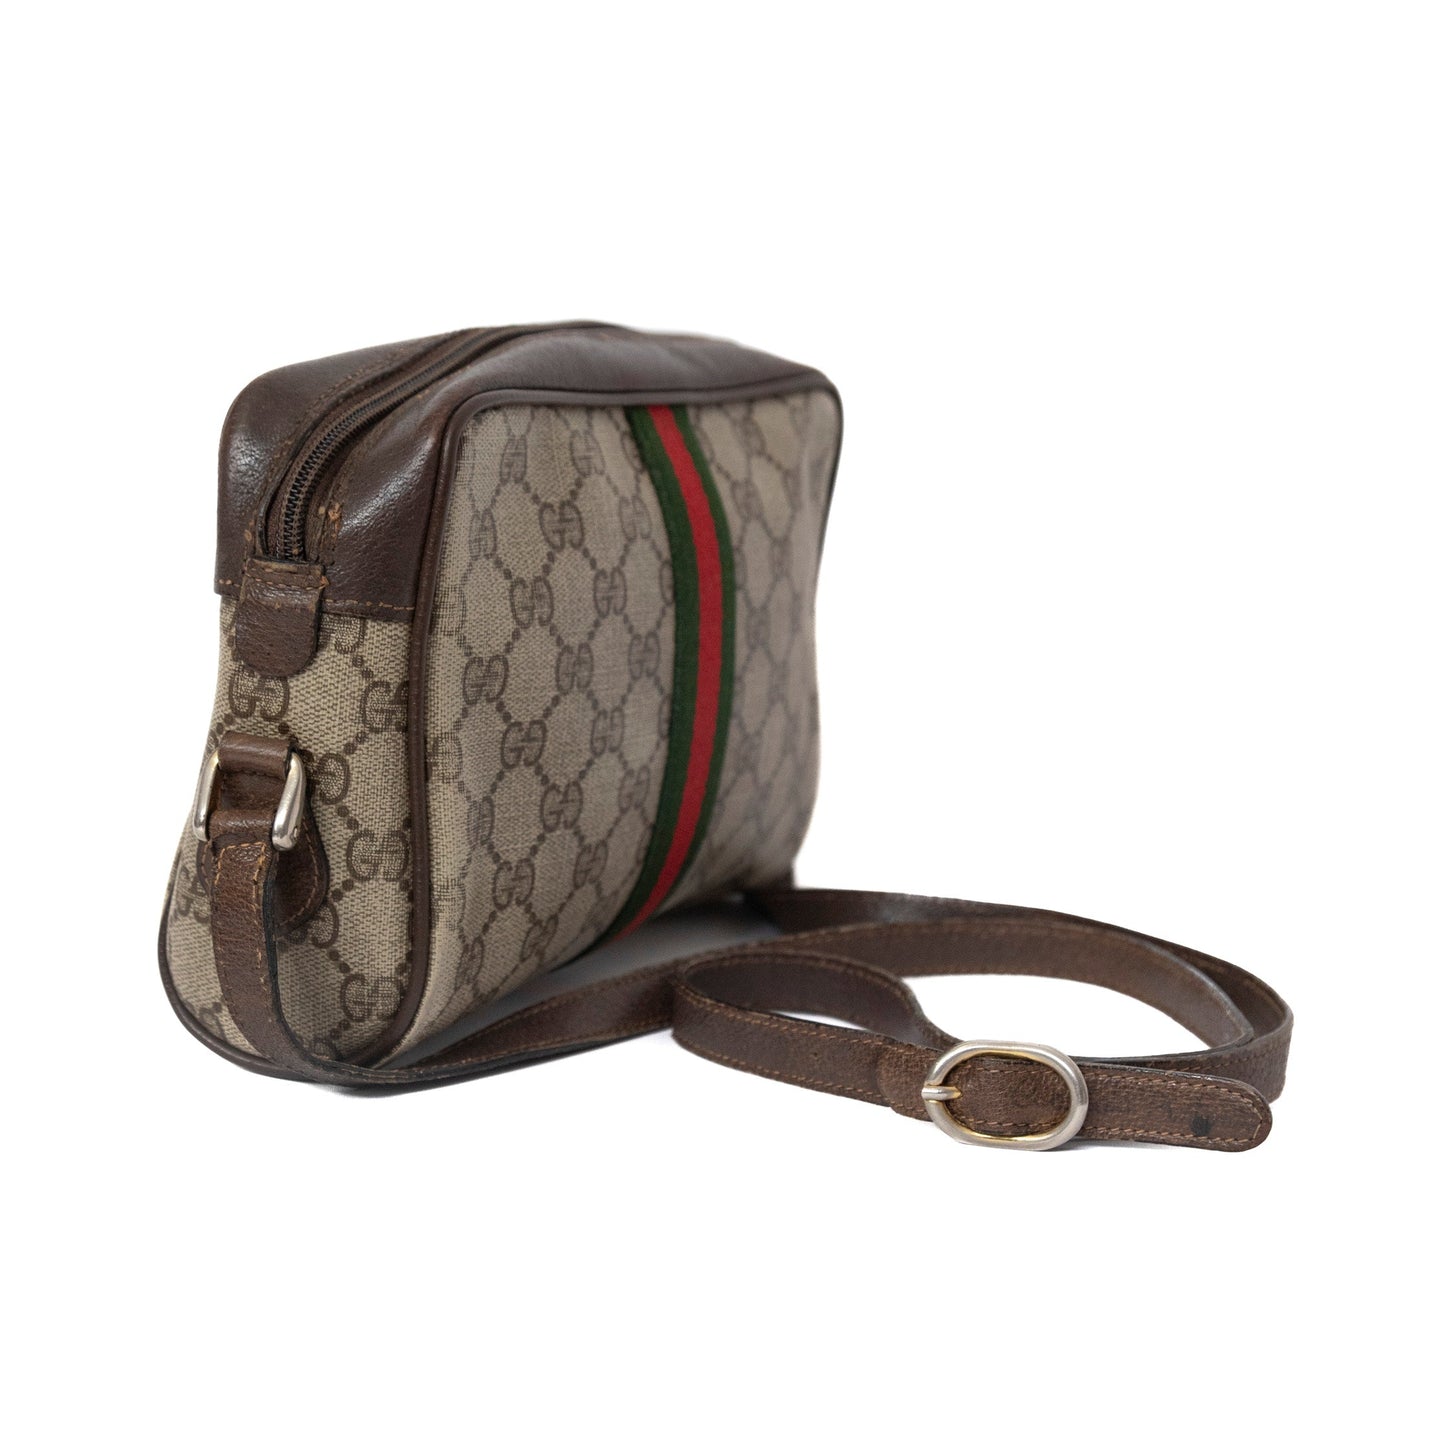 Gucci Crossbody Monogram Bag with Classic Gucci Trim